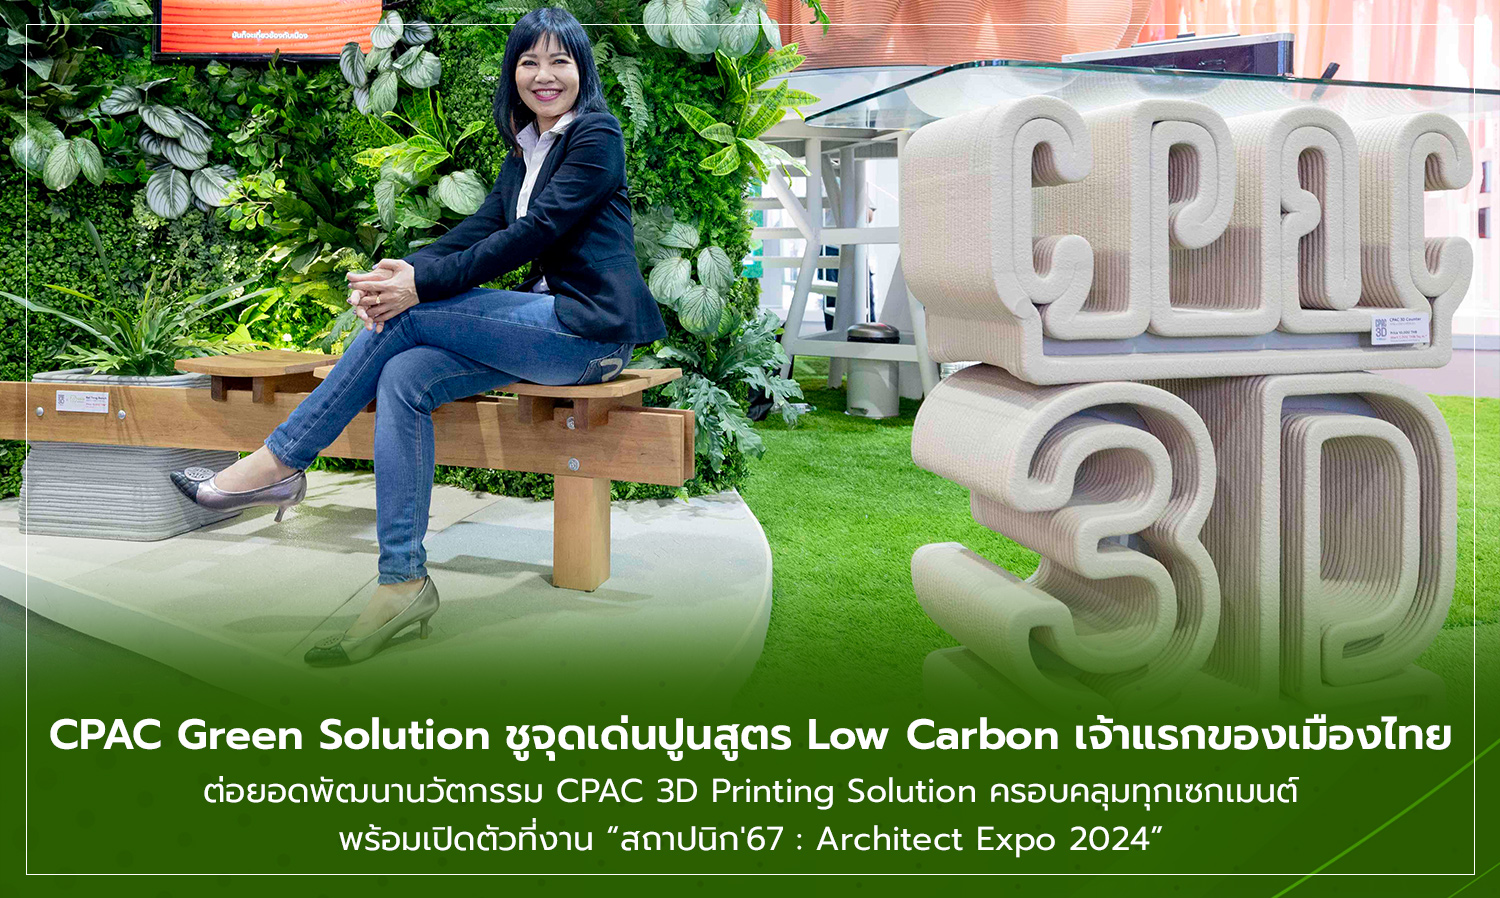 cpac-green-solution-ชูจุดเด่นปูนสูตร-low-carbon-เจ้าแร